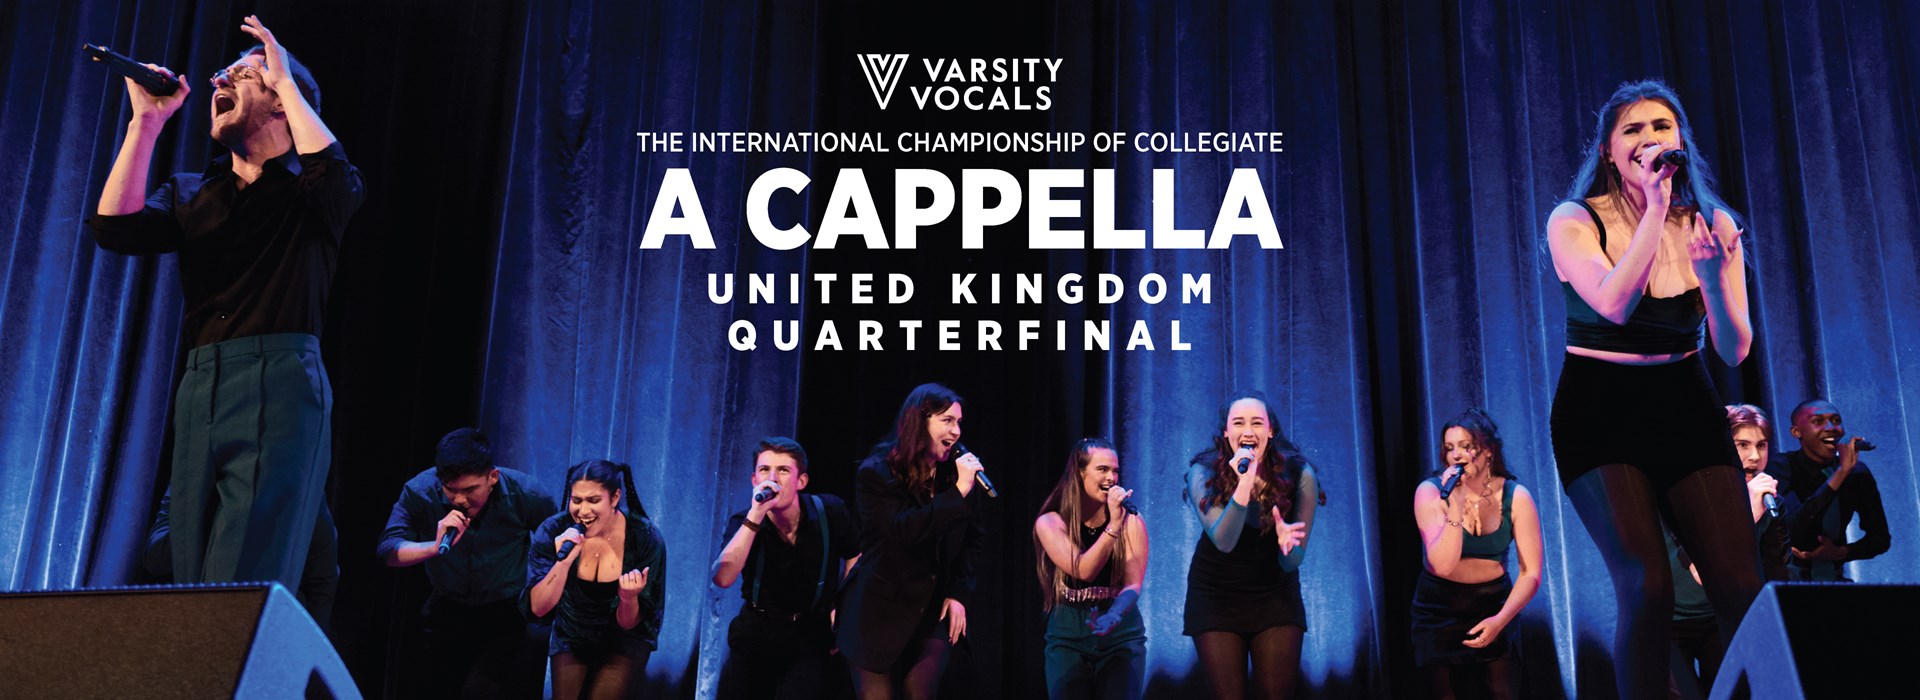 The International Championship of Collegiate A Cappella